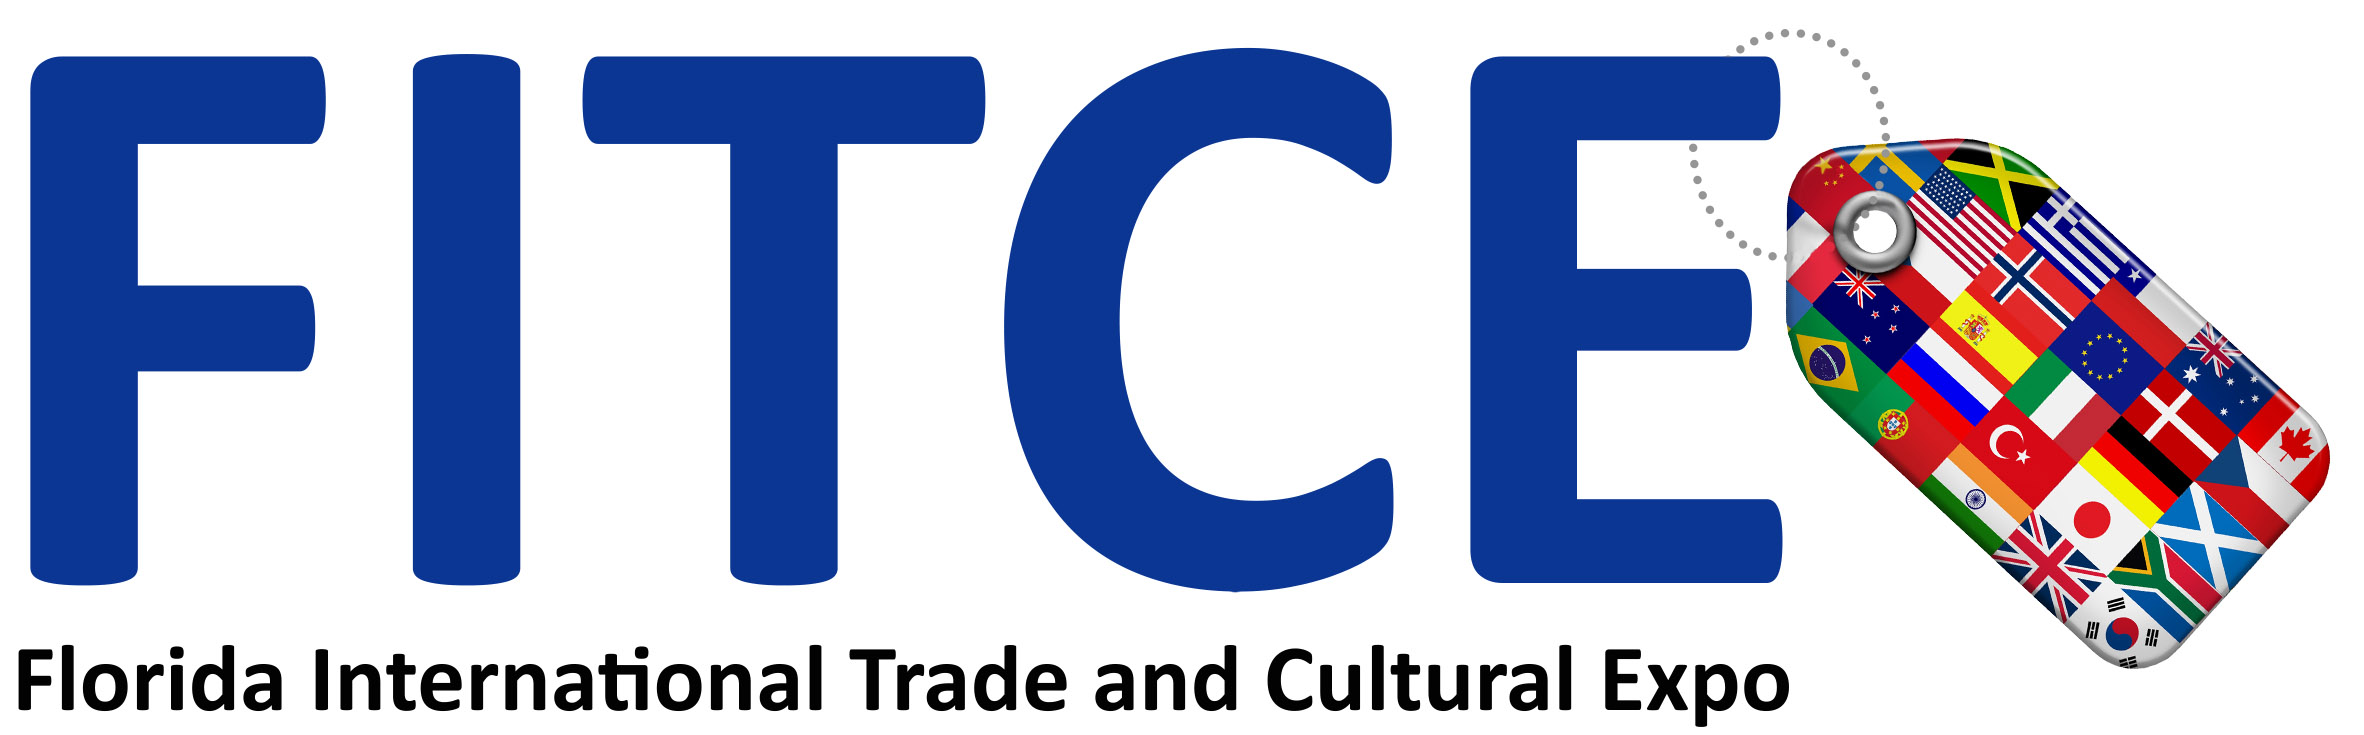 Florida International Trade and Cultural Expo 2022